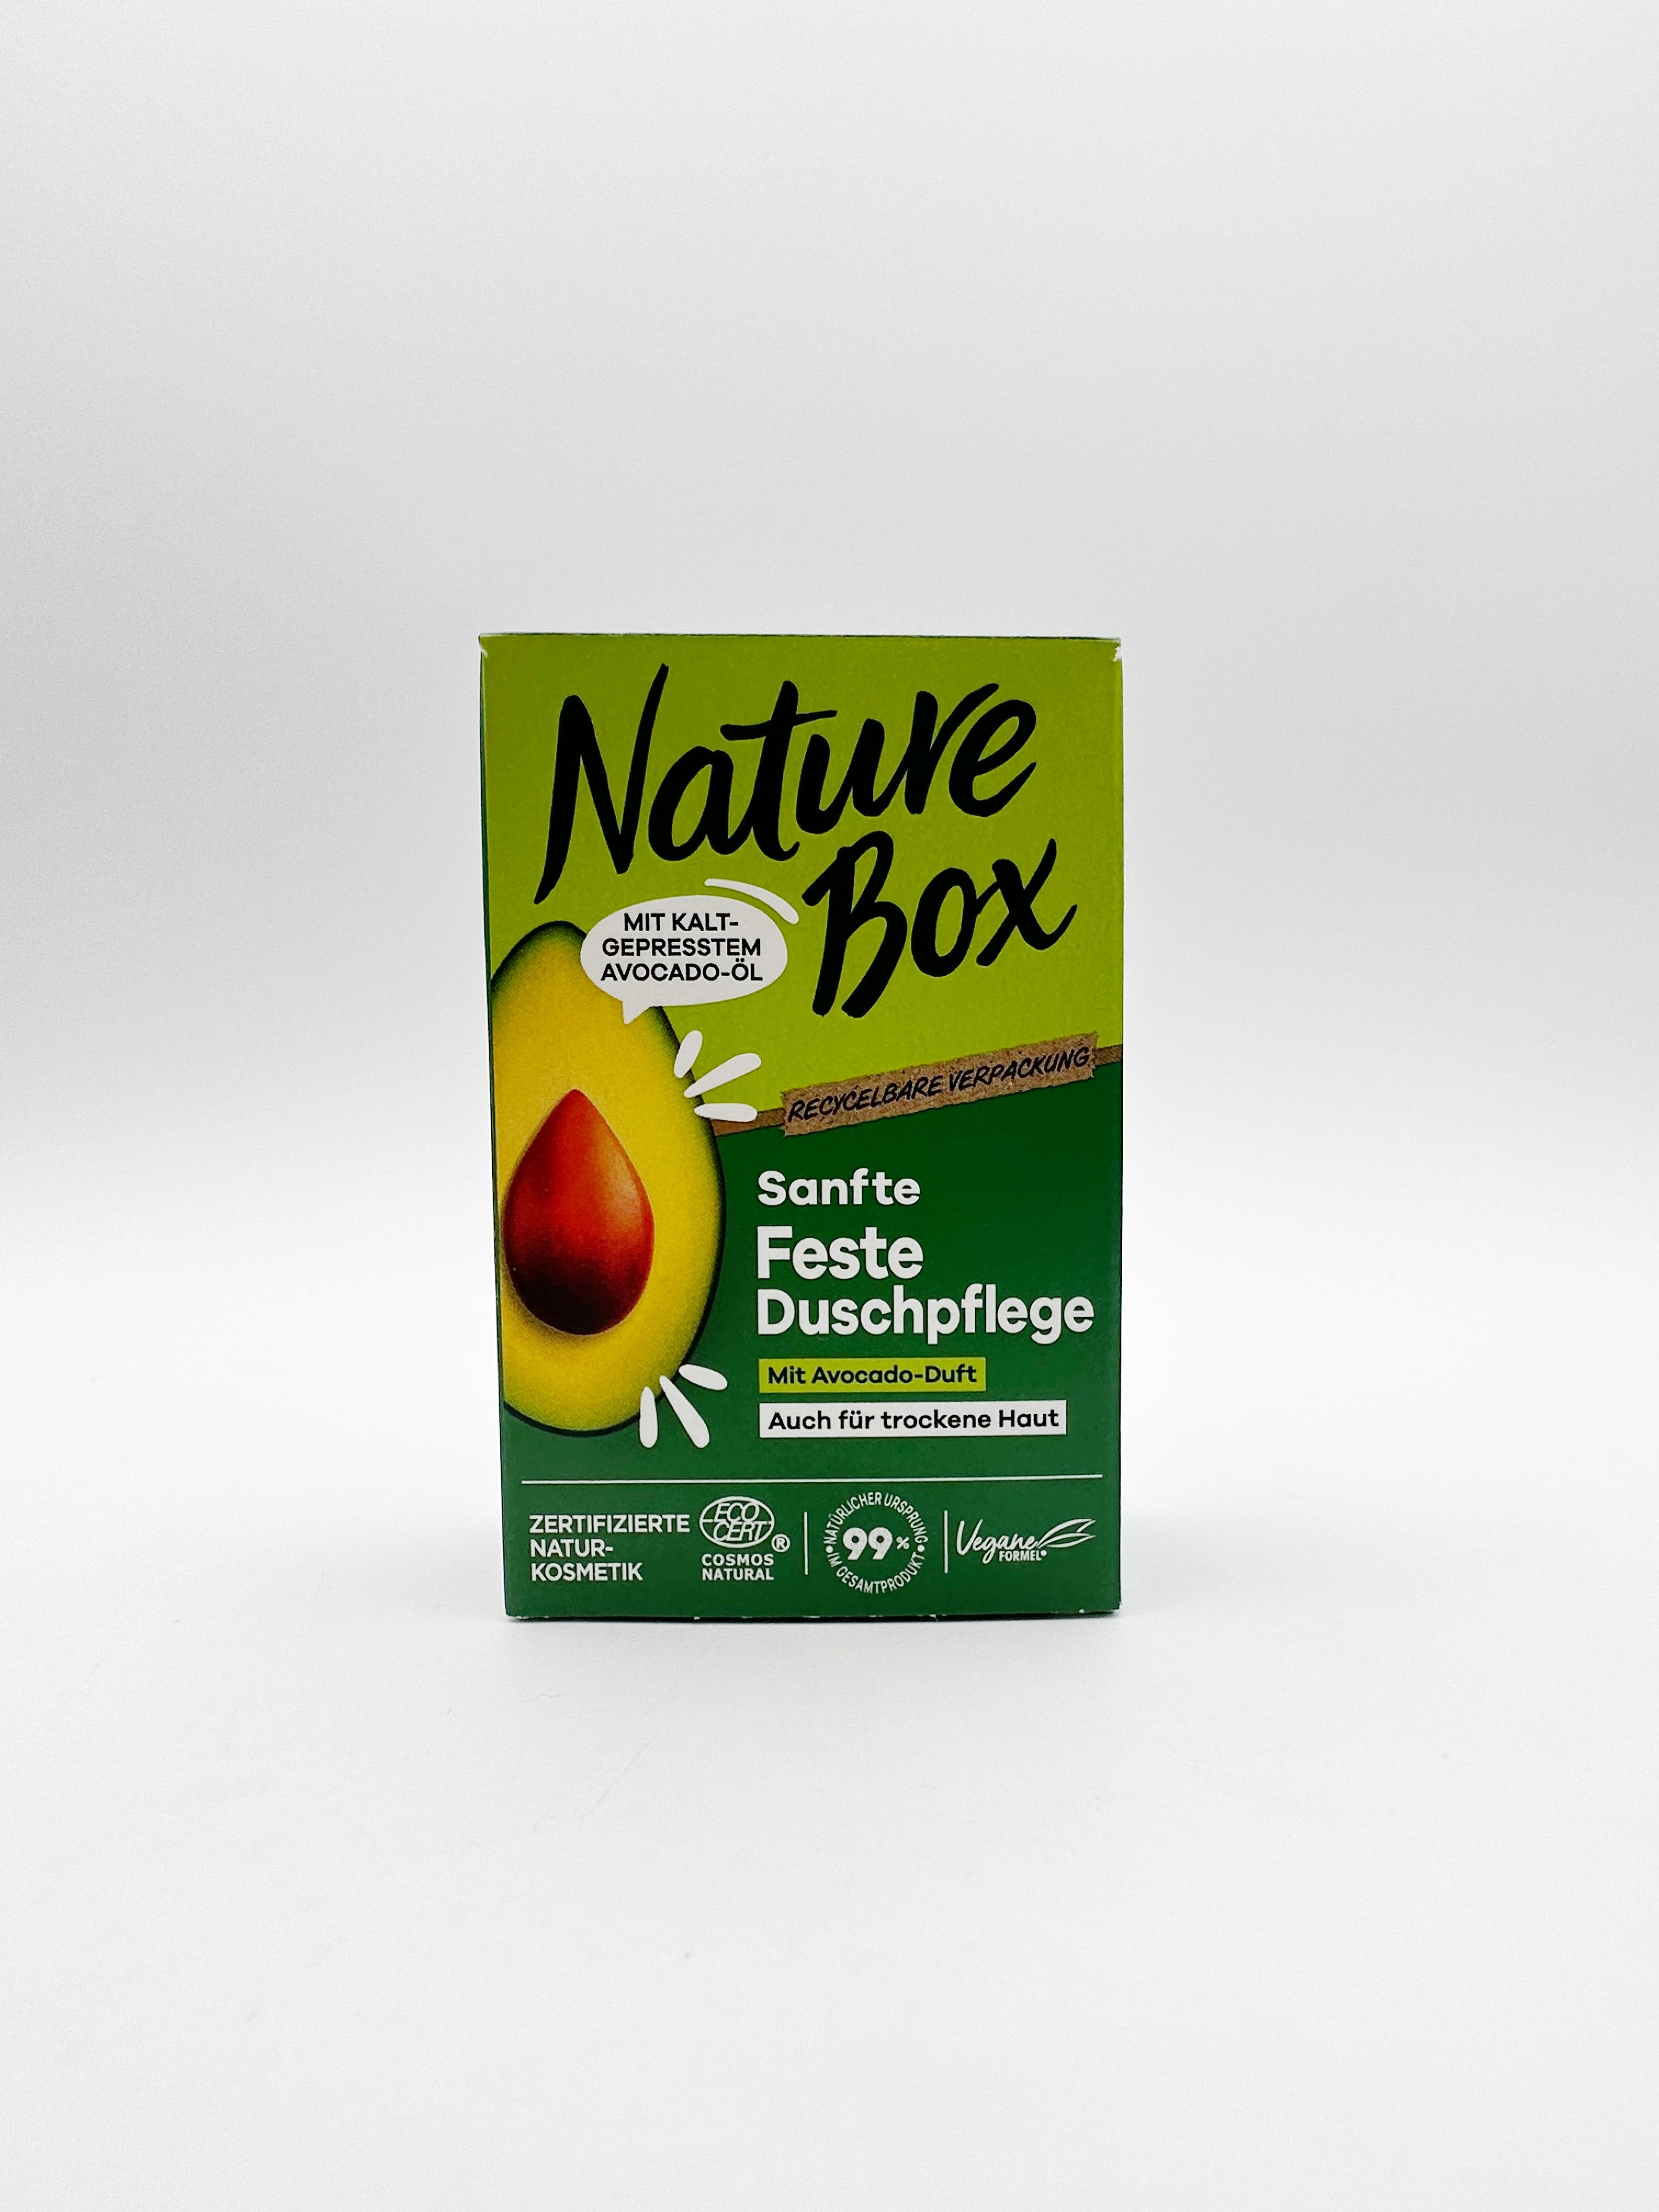 Nature Box feste Duschpflege mit Avocado-Duft